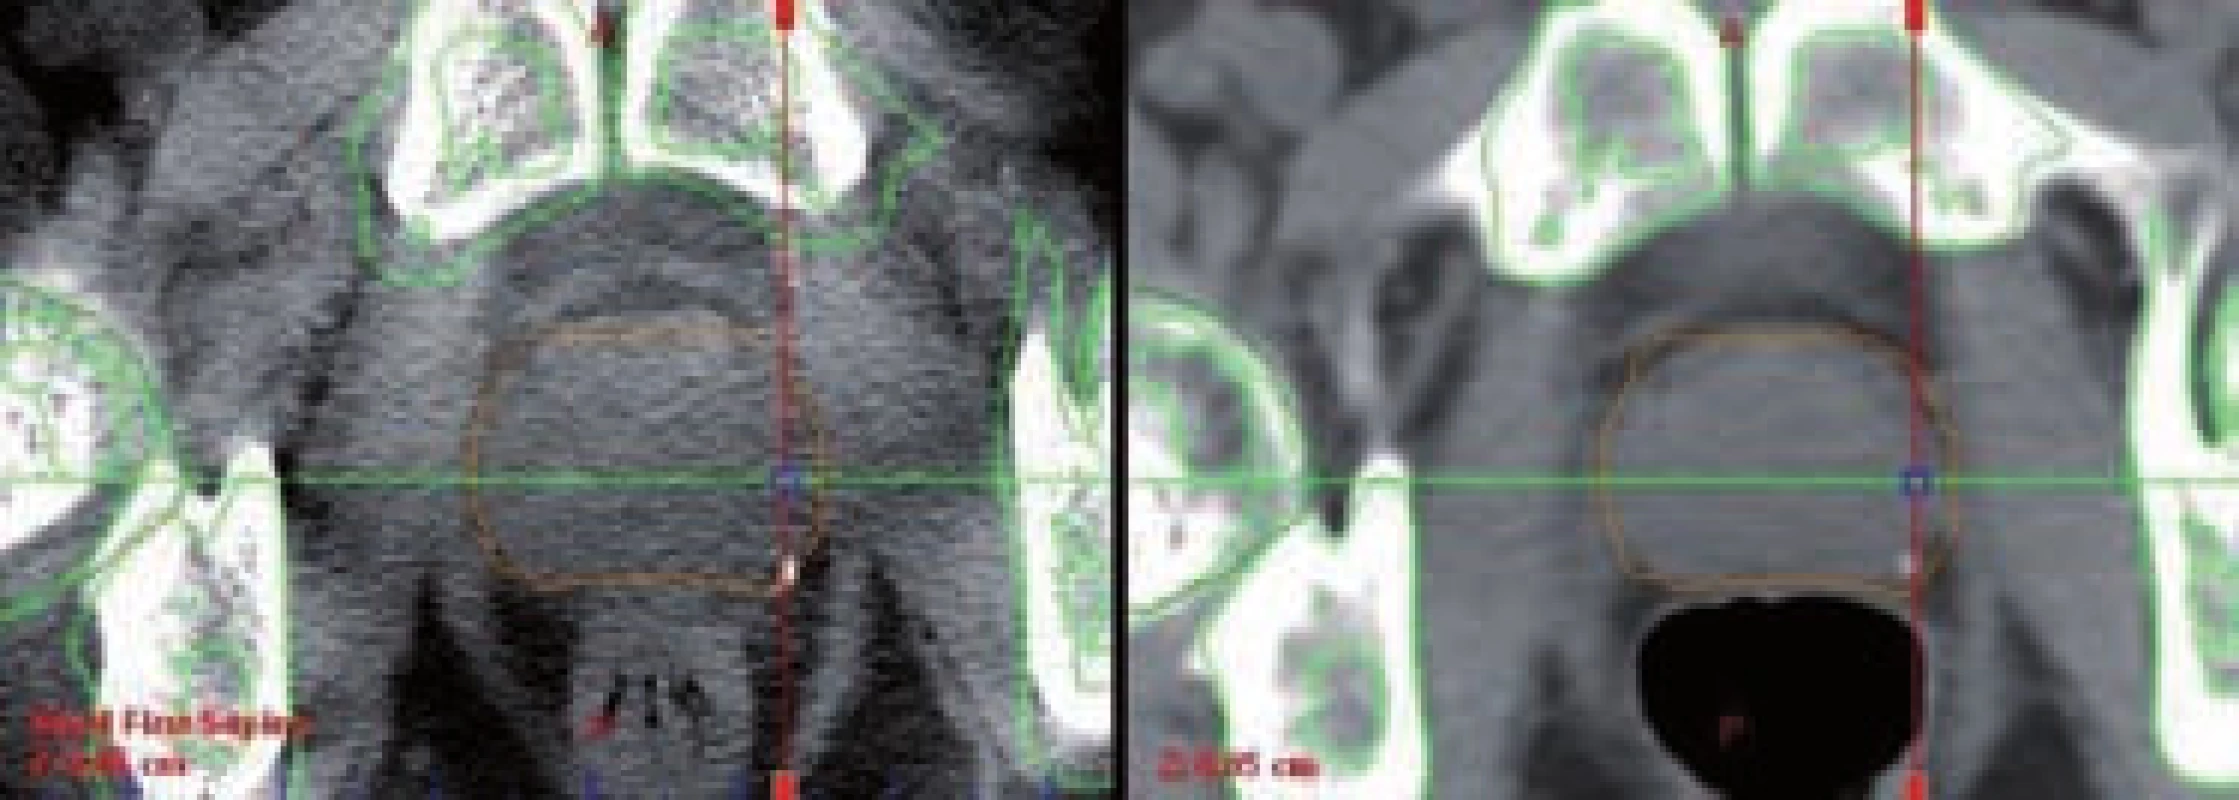 kV cone-beam CT (CBCT) – radioterapie řízená obrazem (IGRT) 
Fig. 10 kV cone-beam CT (CBCT) – image-guided radiation therapy (IGRT)